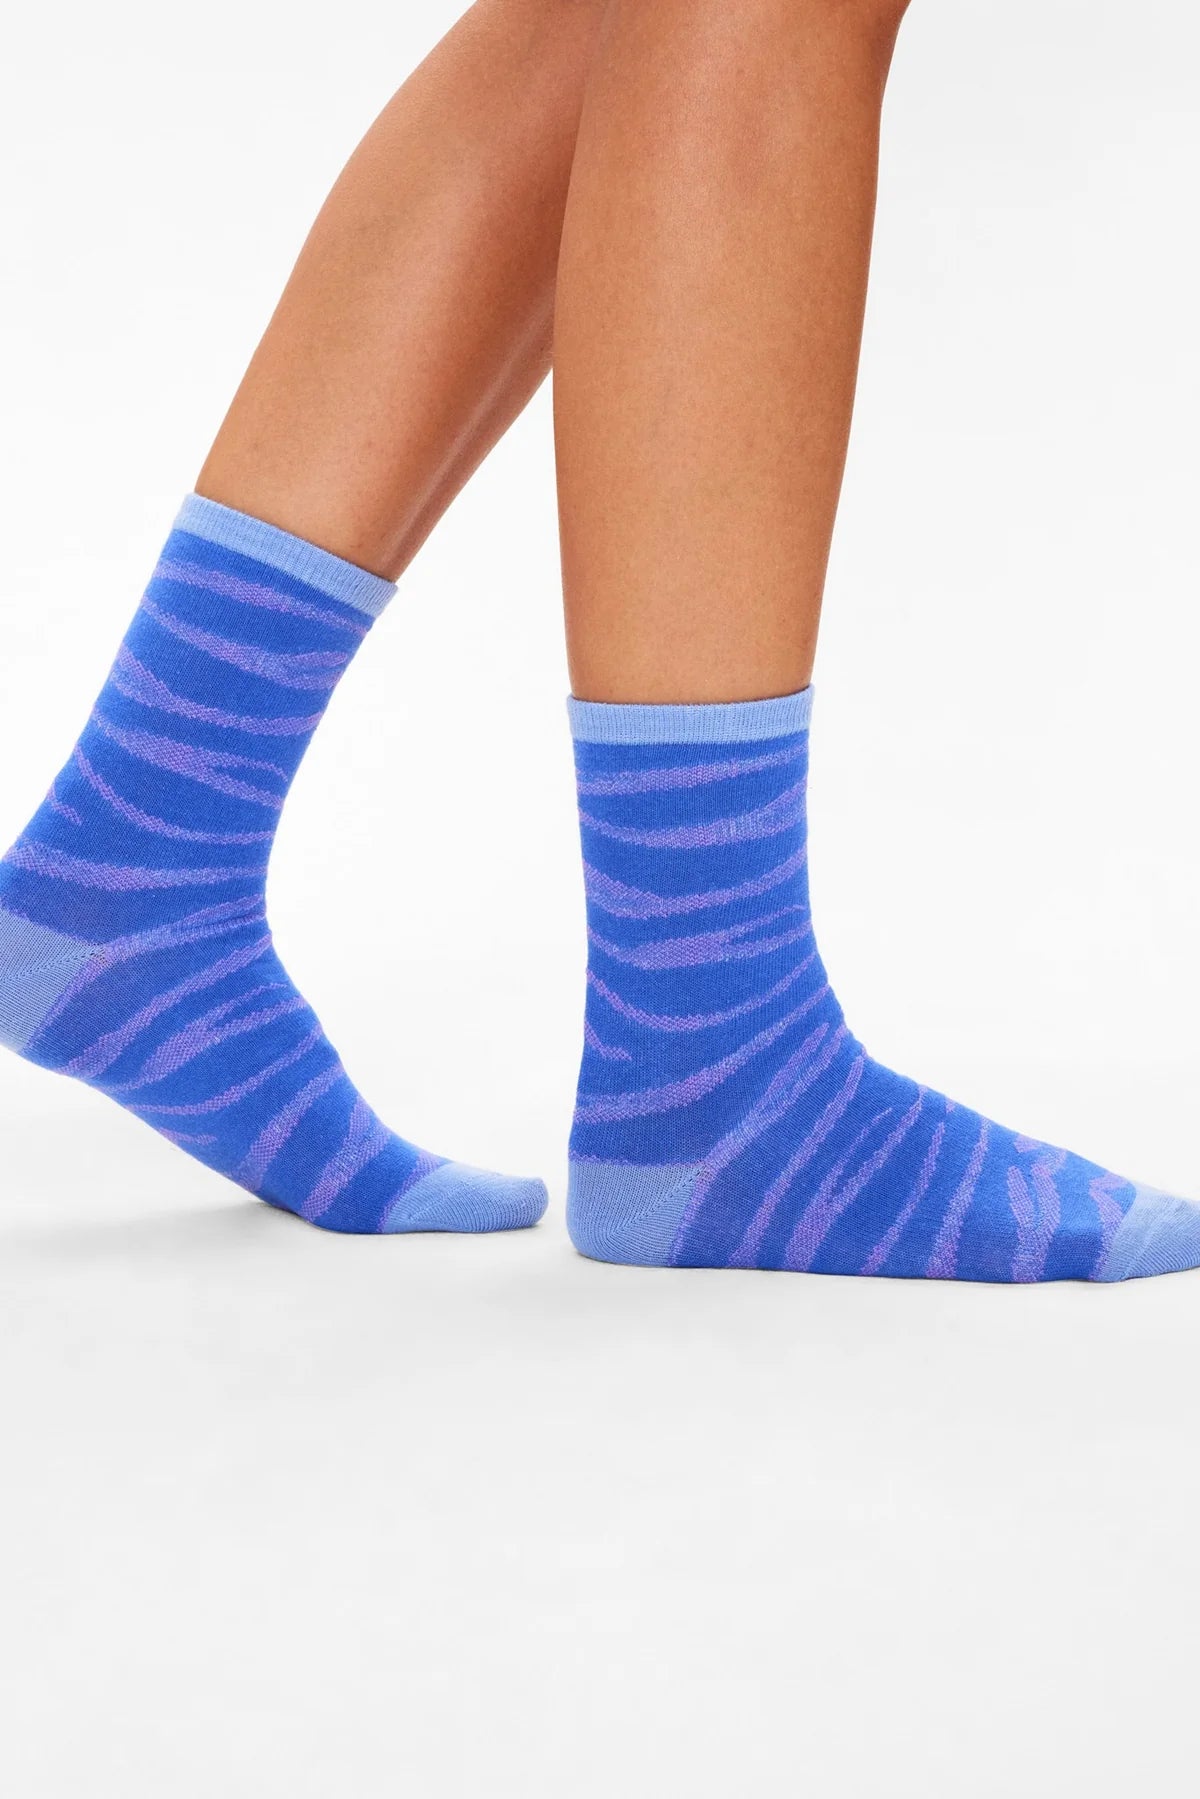 Numph Multipack Nuzandra Socks - Pink, Blue & Brown